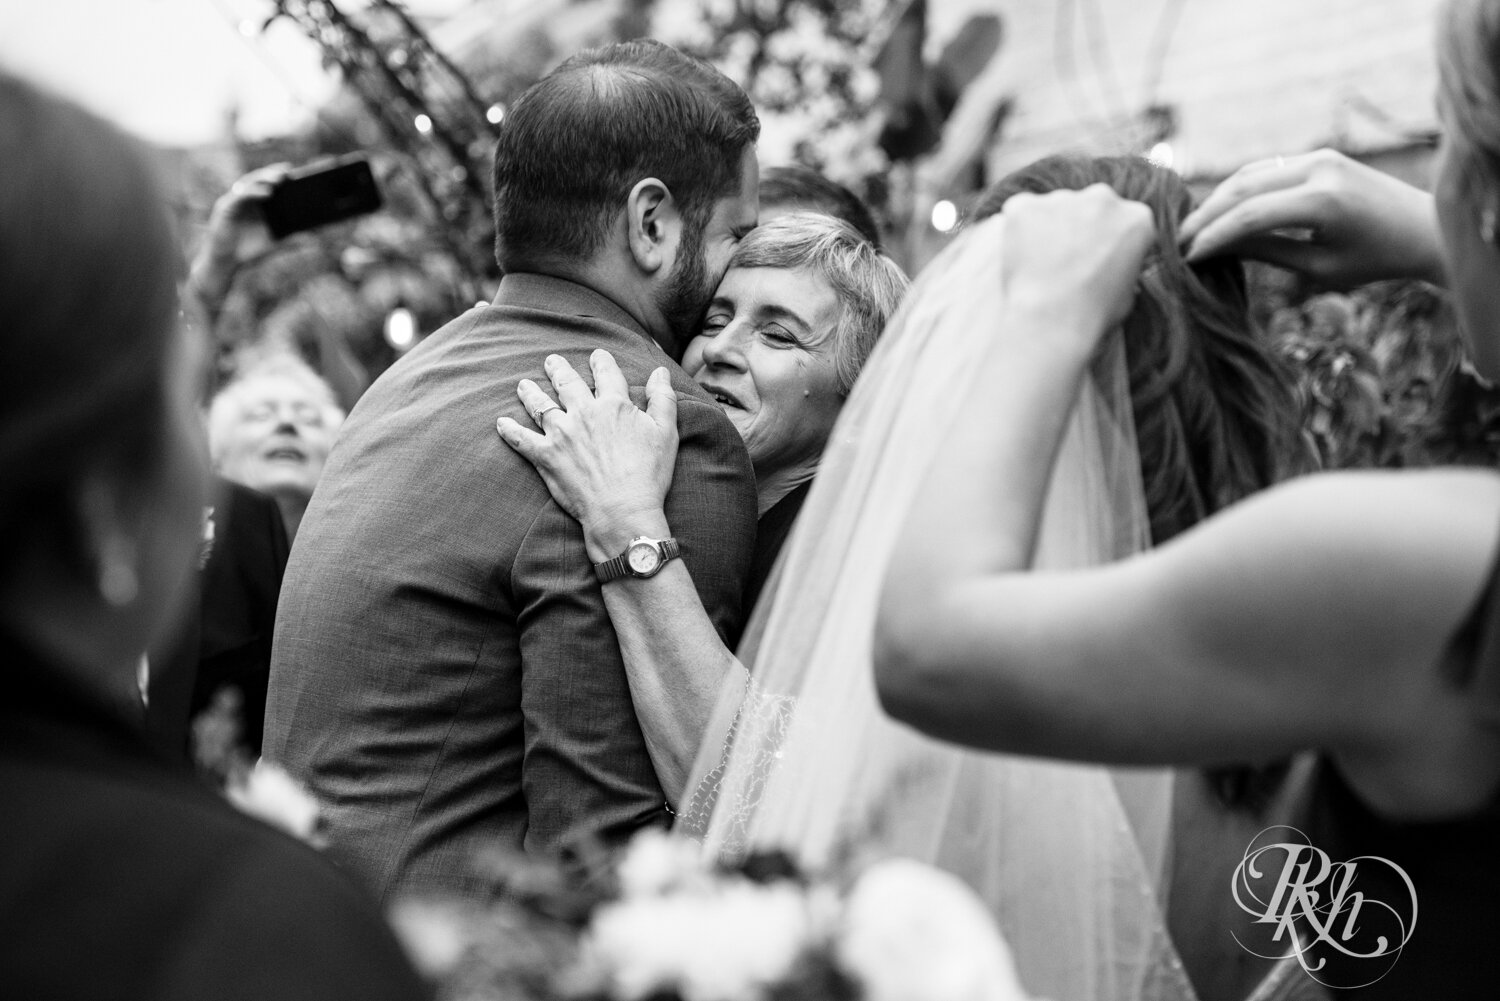 Groom hugs mom after wedding at Kellerman's Event Center in White Bear Lake, Minnesota.